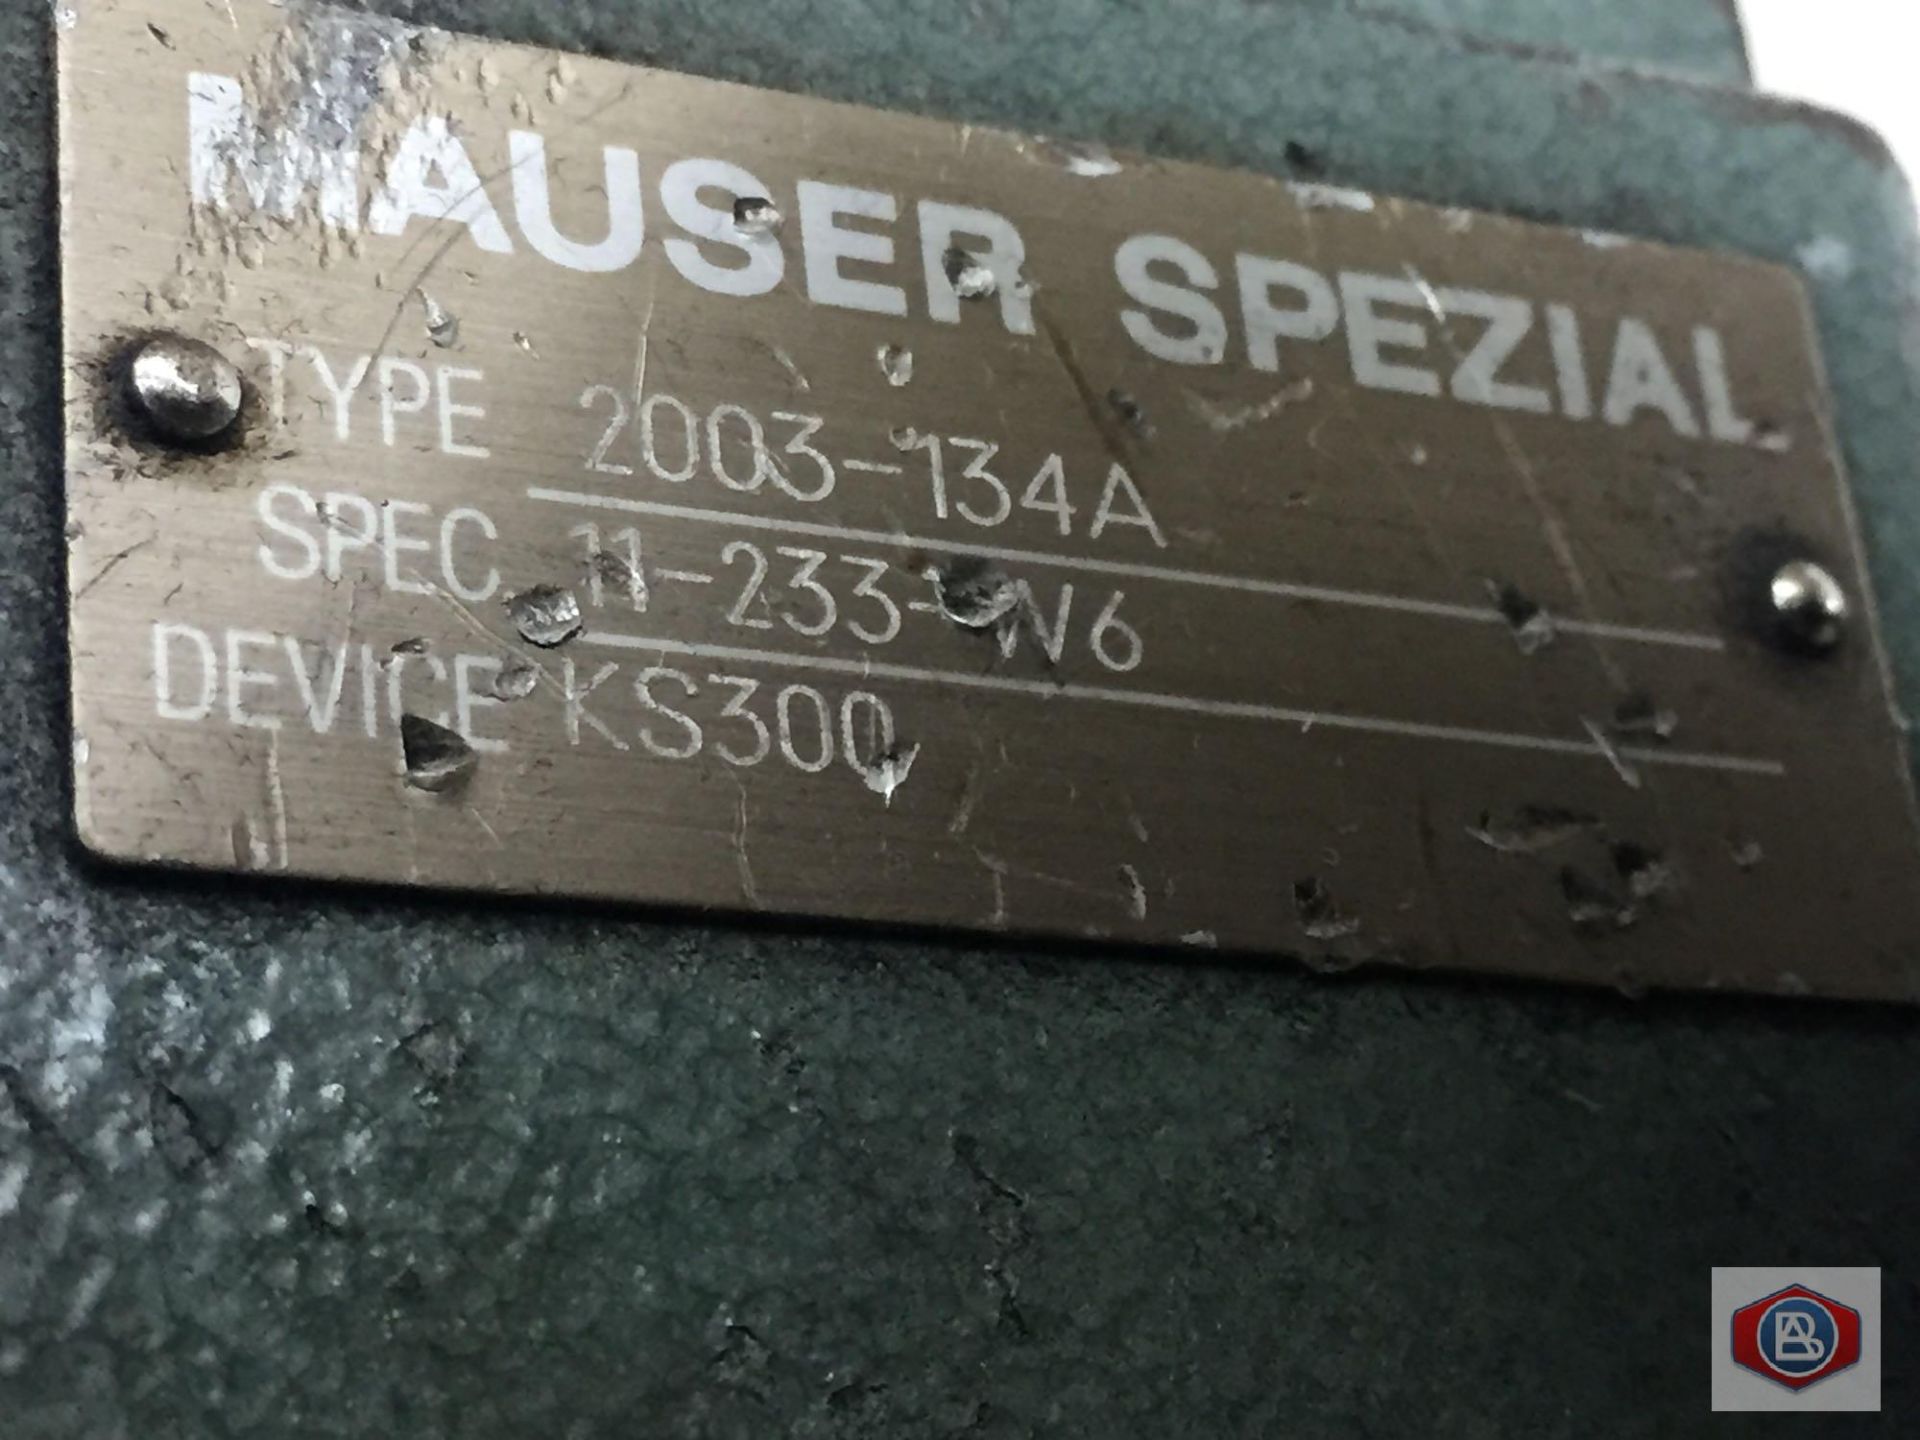 Mauser Spezial Mod. 2003-134A Overlock - Image 5 of 6